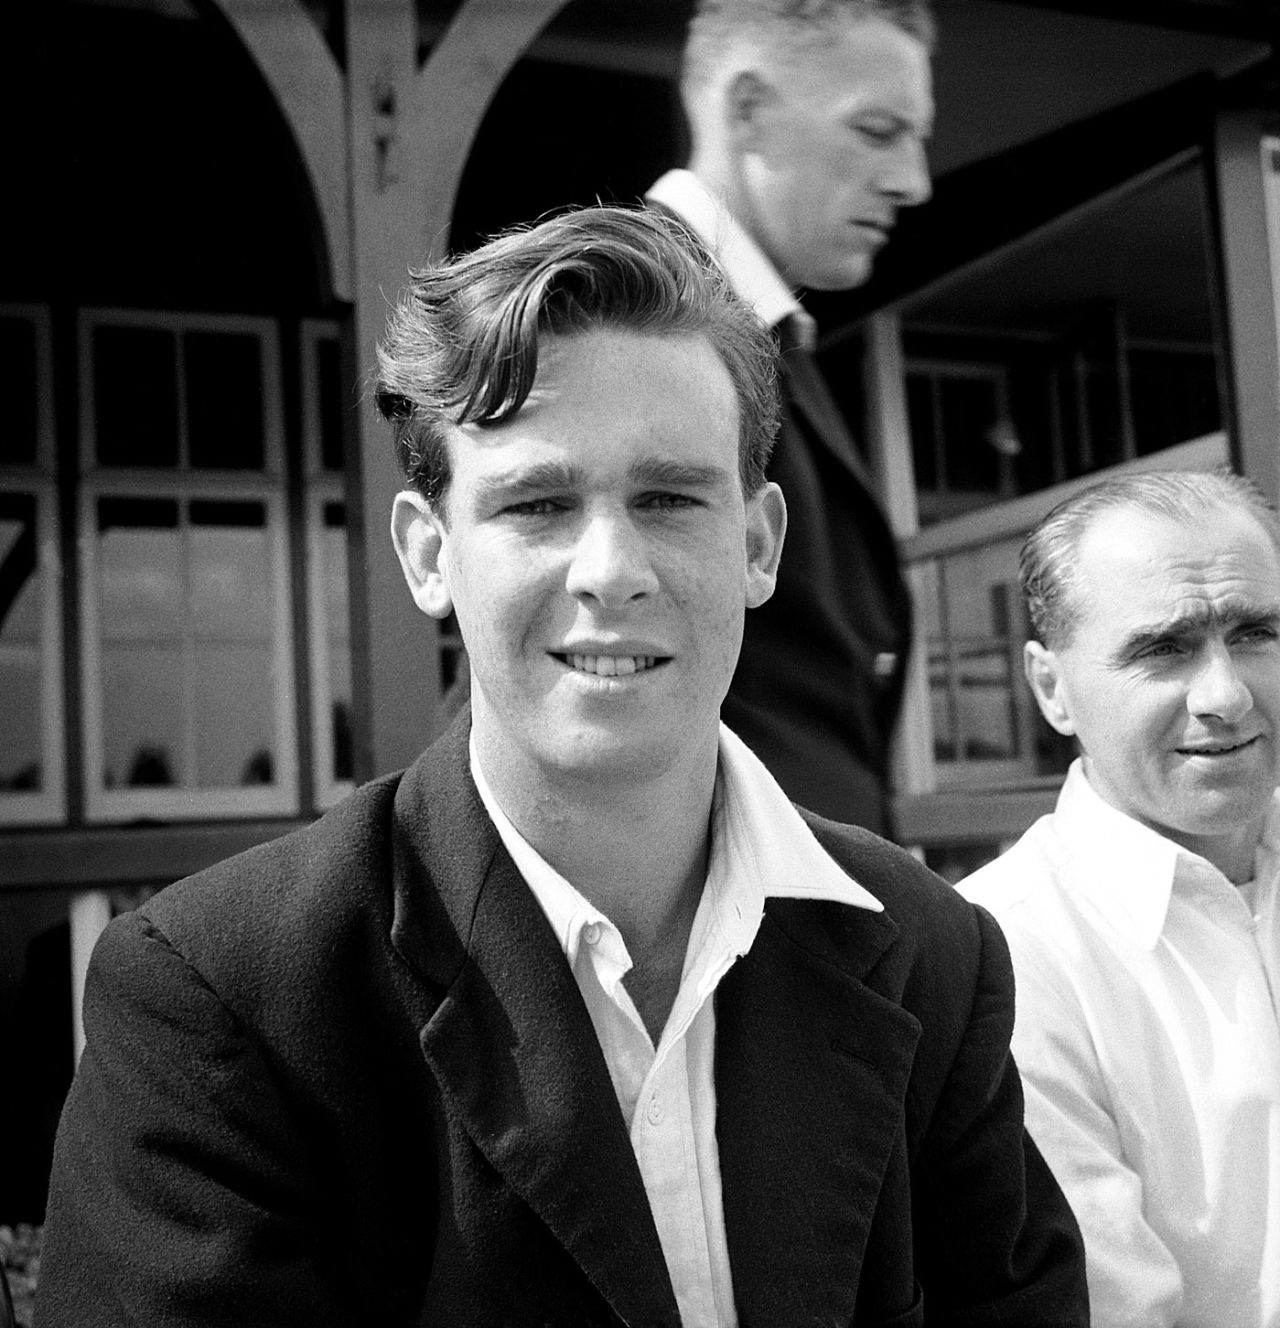 Lancashire and England's Nigel Howard, England, September 11, 1951